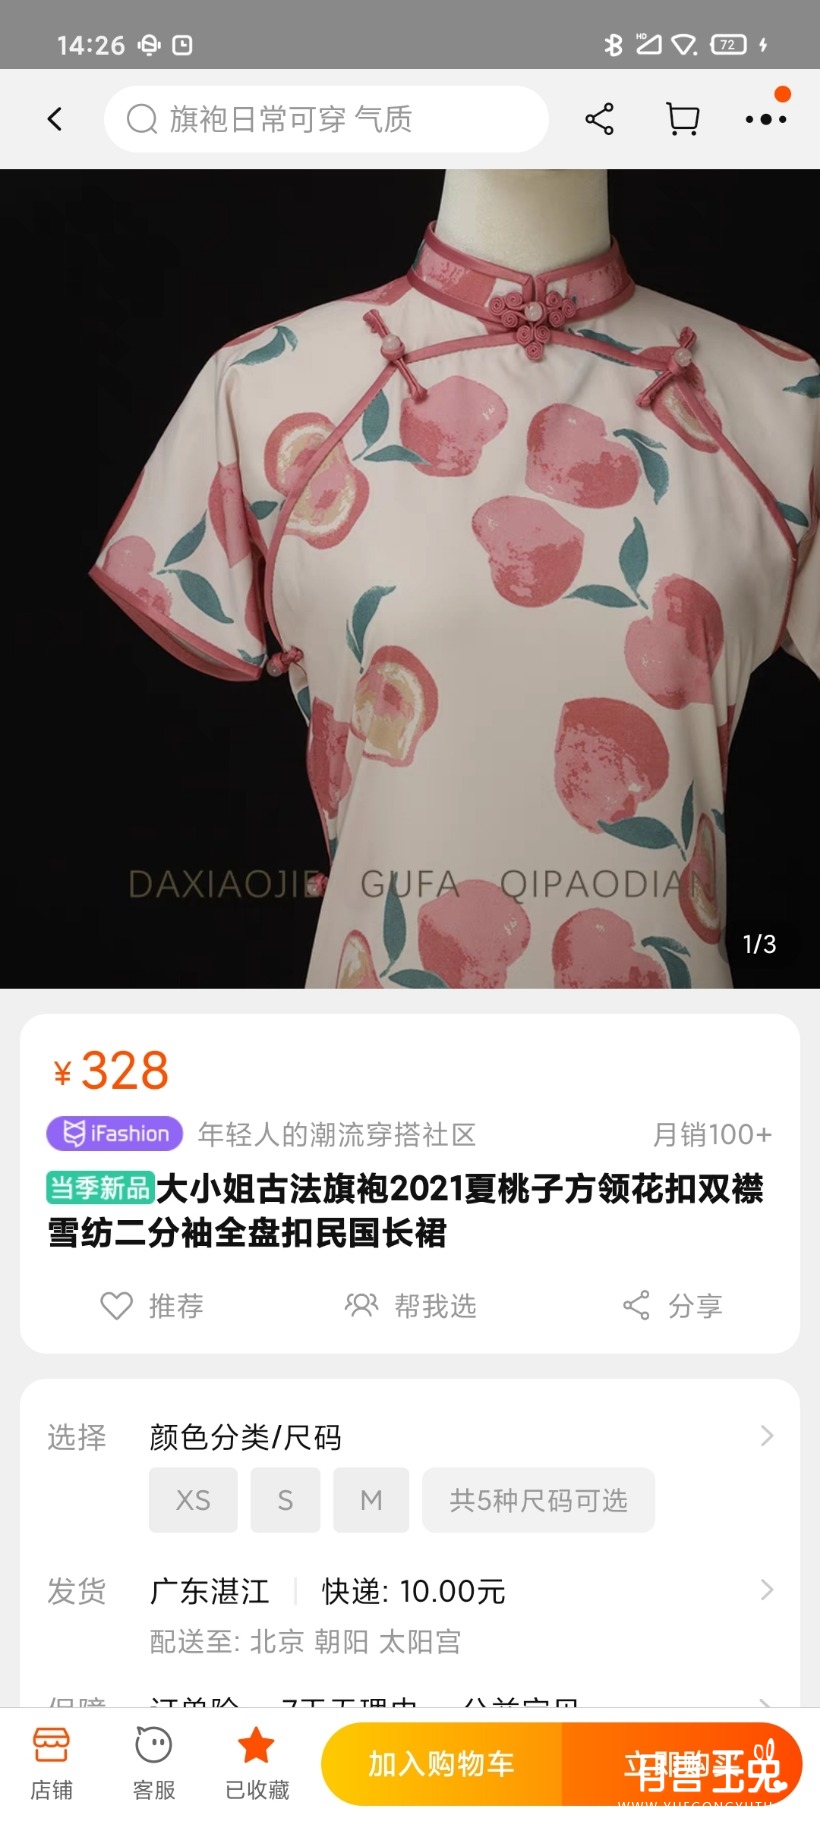 Screenshot_2021-03-31-14-26-00-264_com.taobao.taobao.jpg